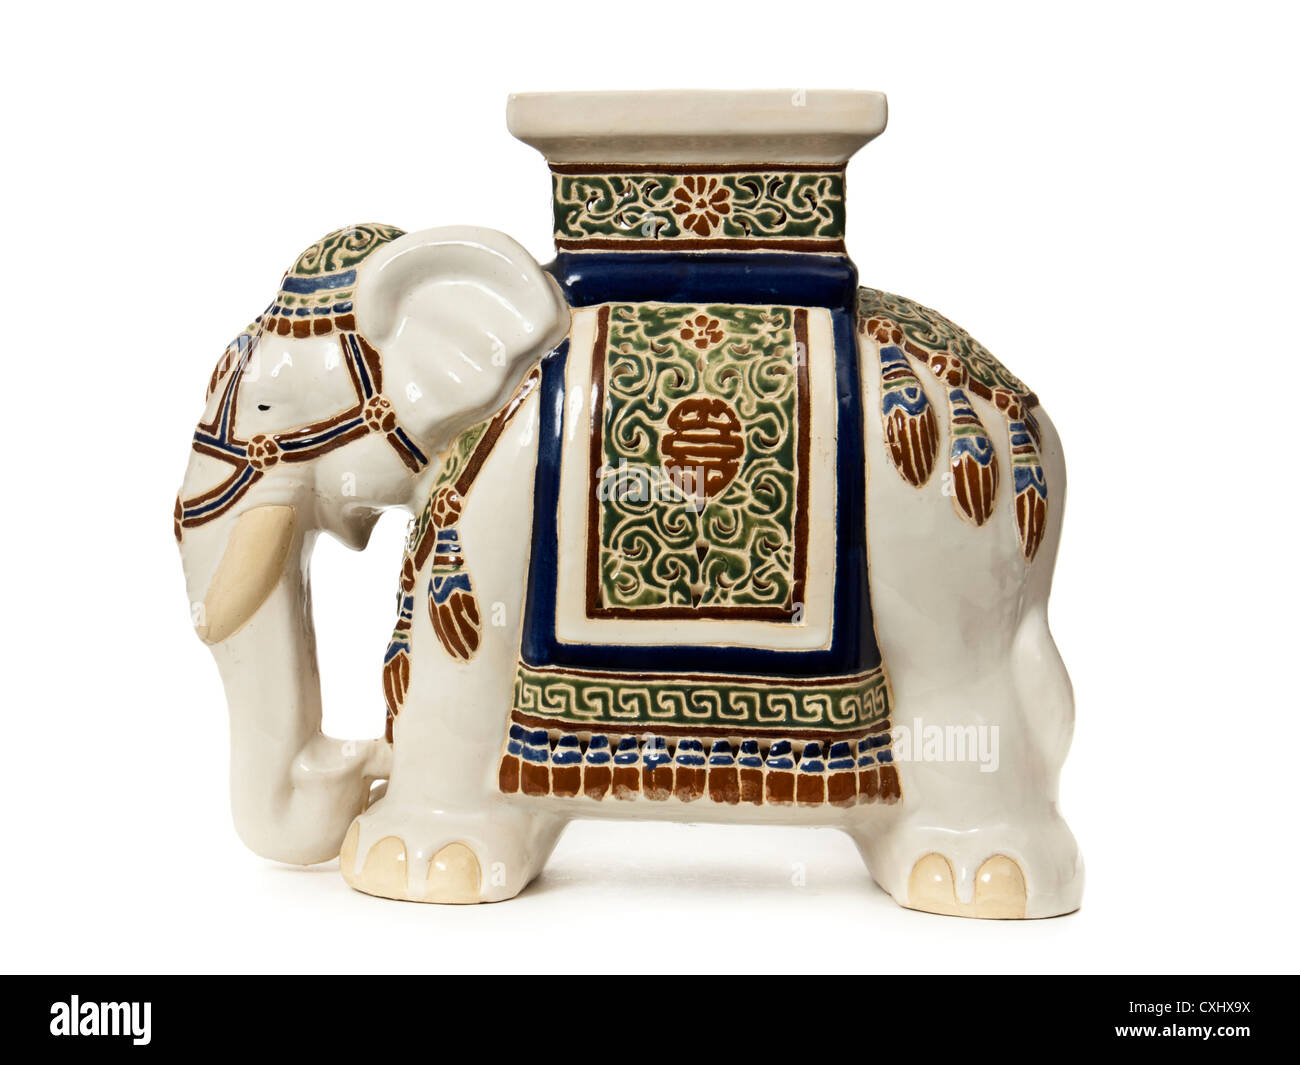 Große Keramik Elefant-förmige Anlage stand Stockfotografie - Alamy